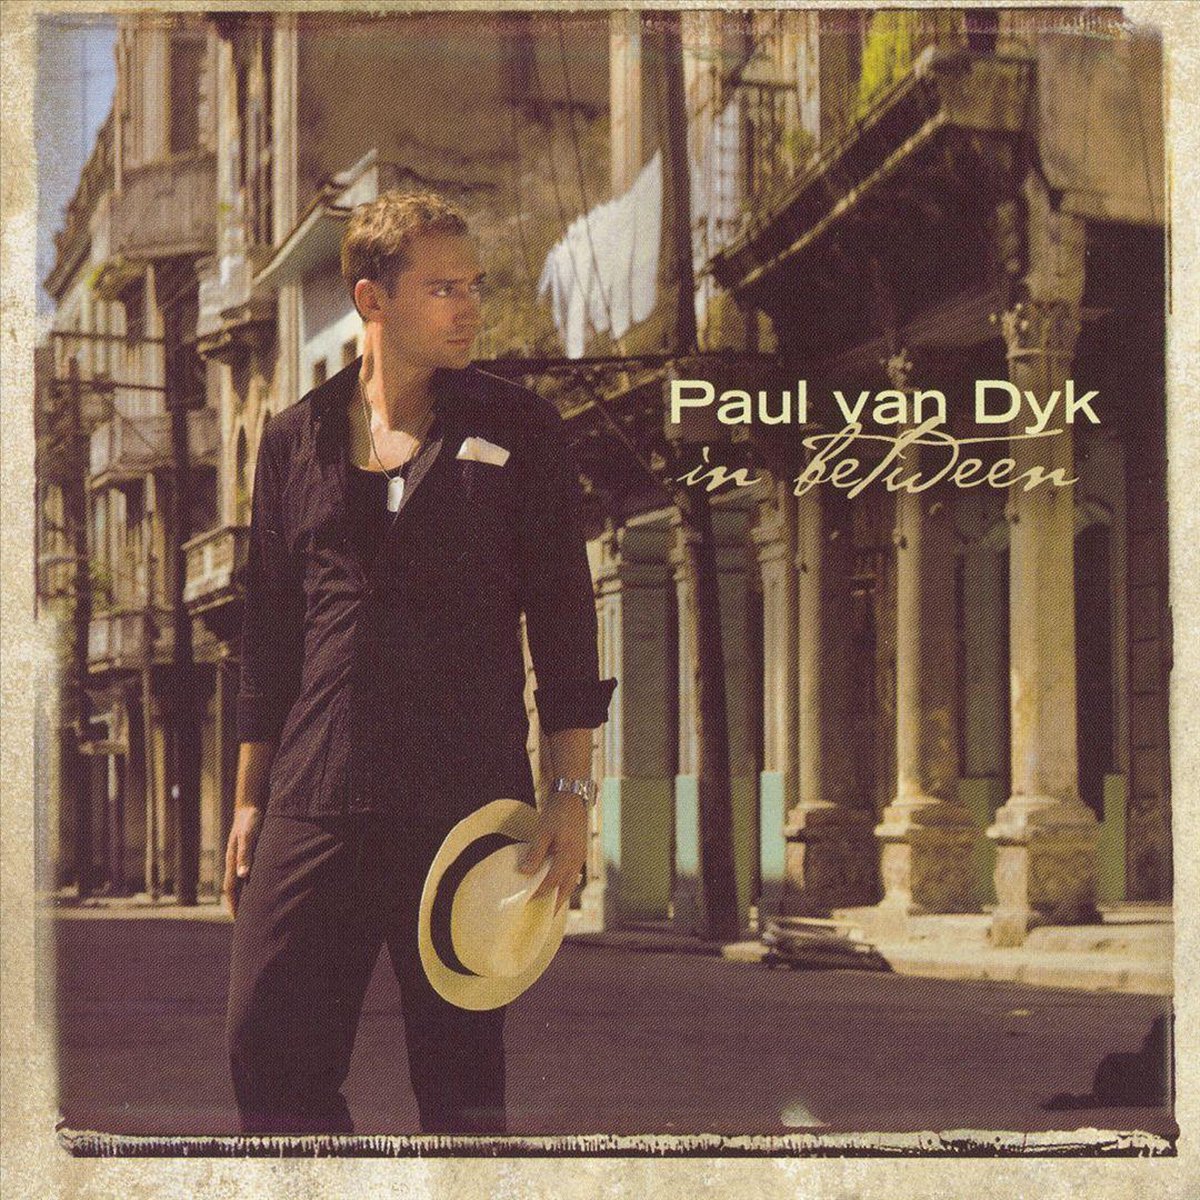 In Between - Paul van Dyk